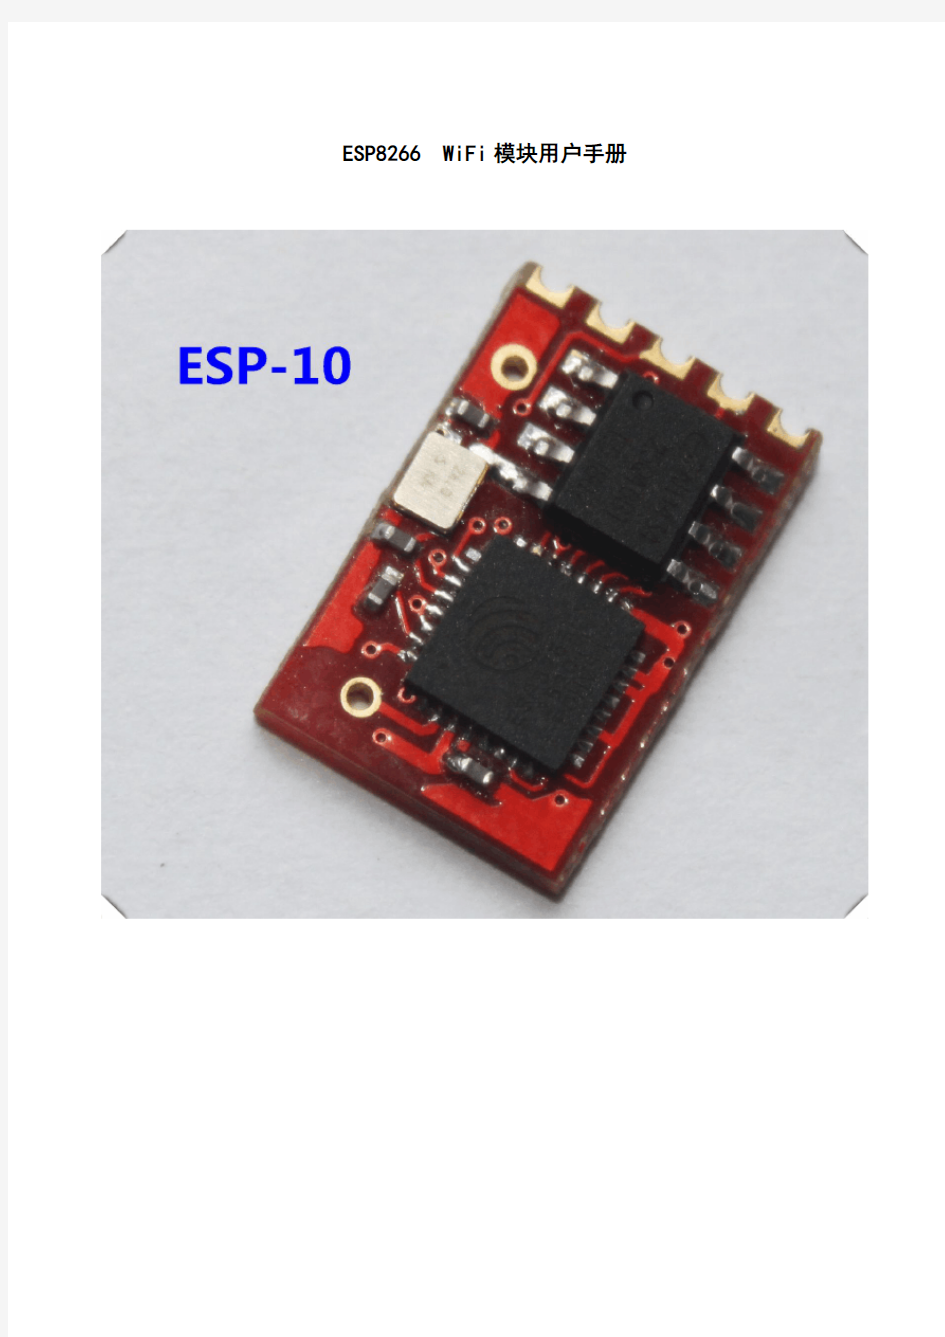 esp8266-10wifi模块用户手册